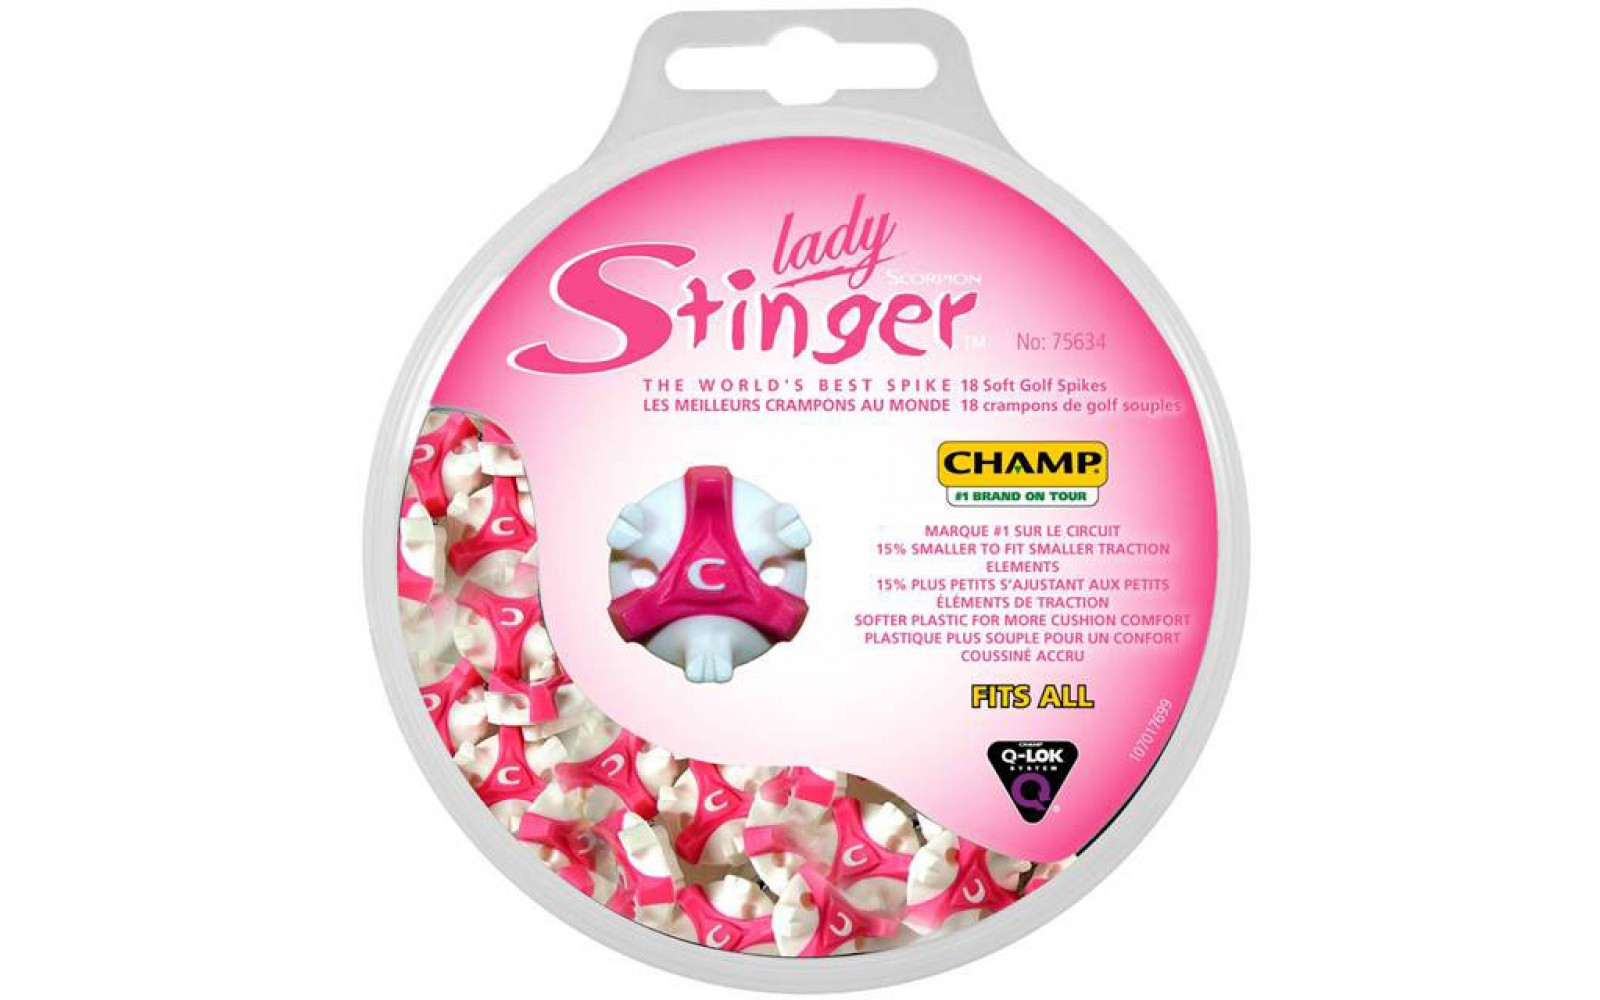 Champ Lady Stinger Spikes disk